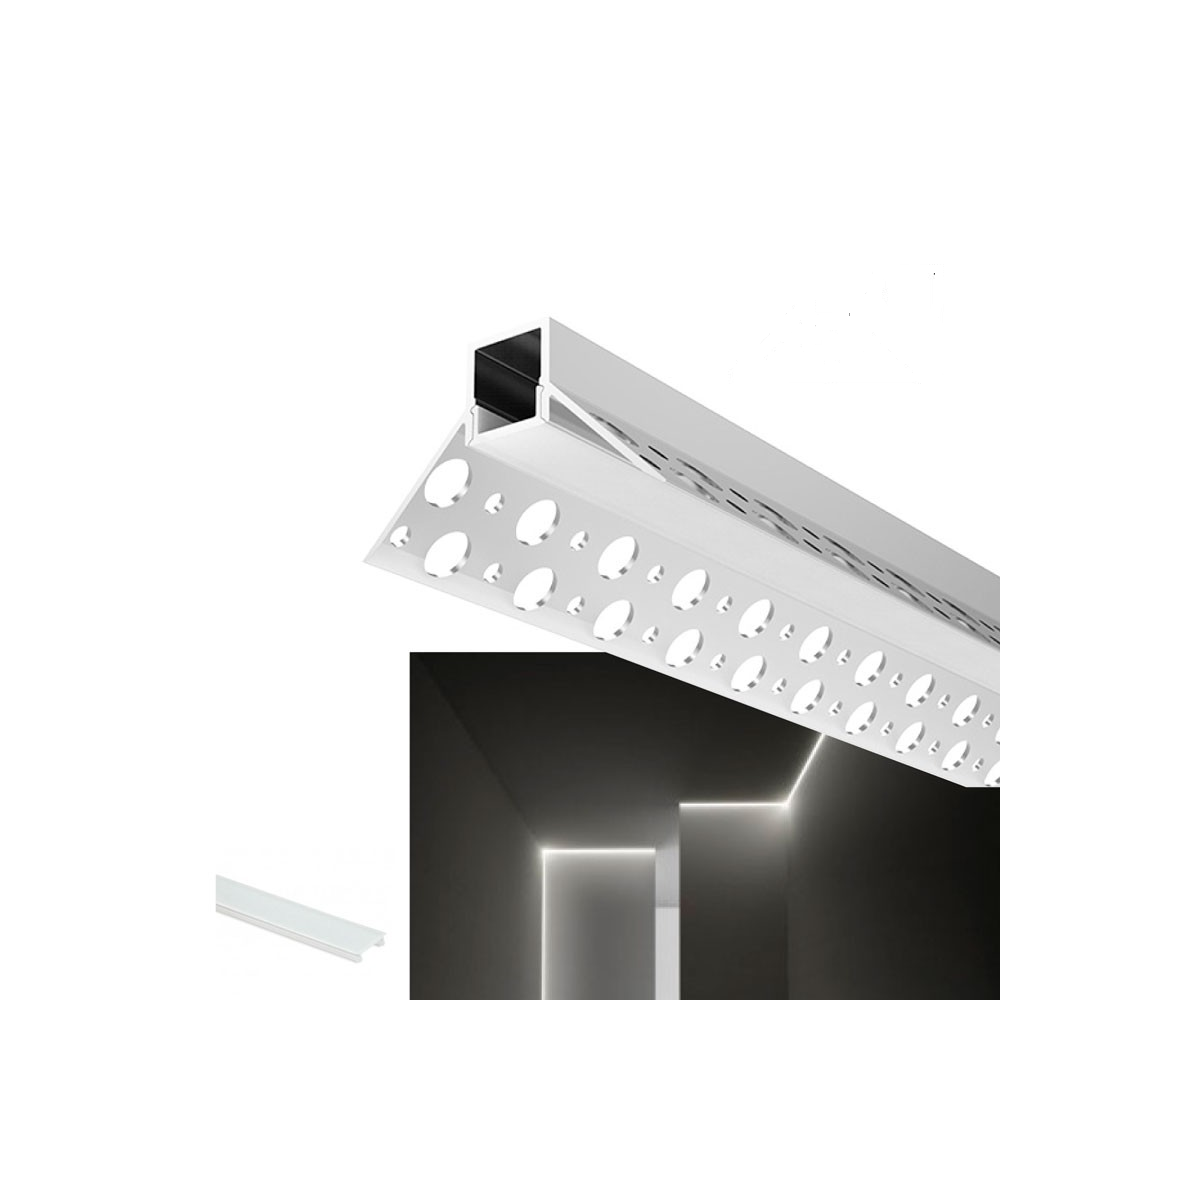 Plaster/Pladur 46x26 Inside Corner Integration Profile (2m)